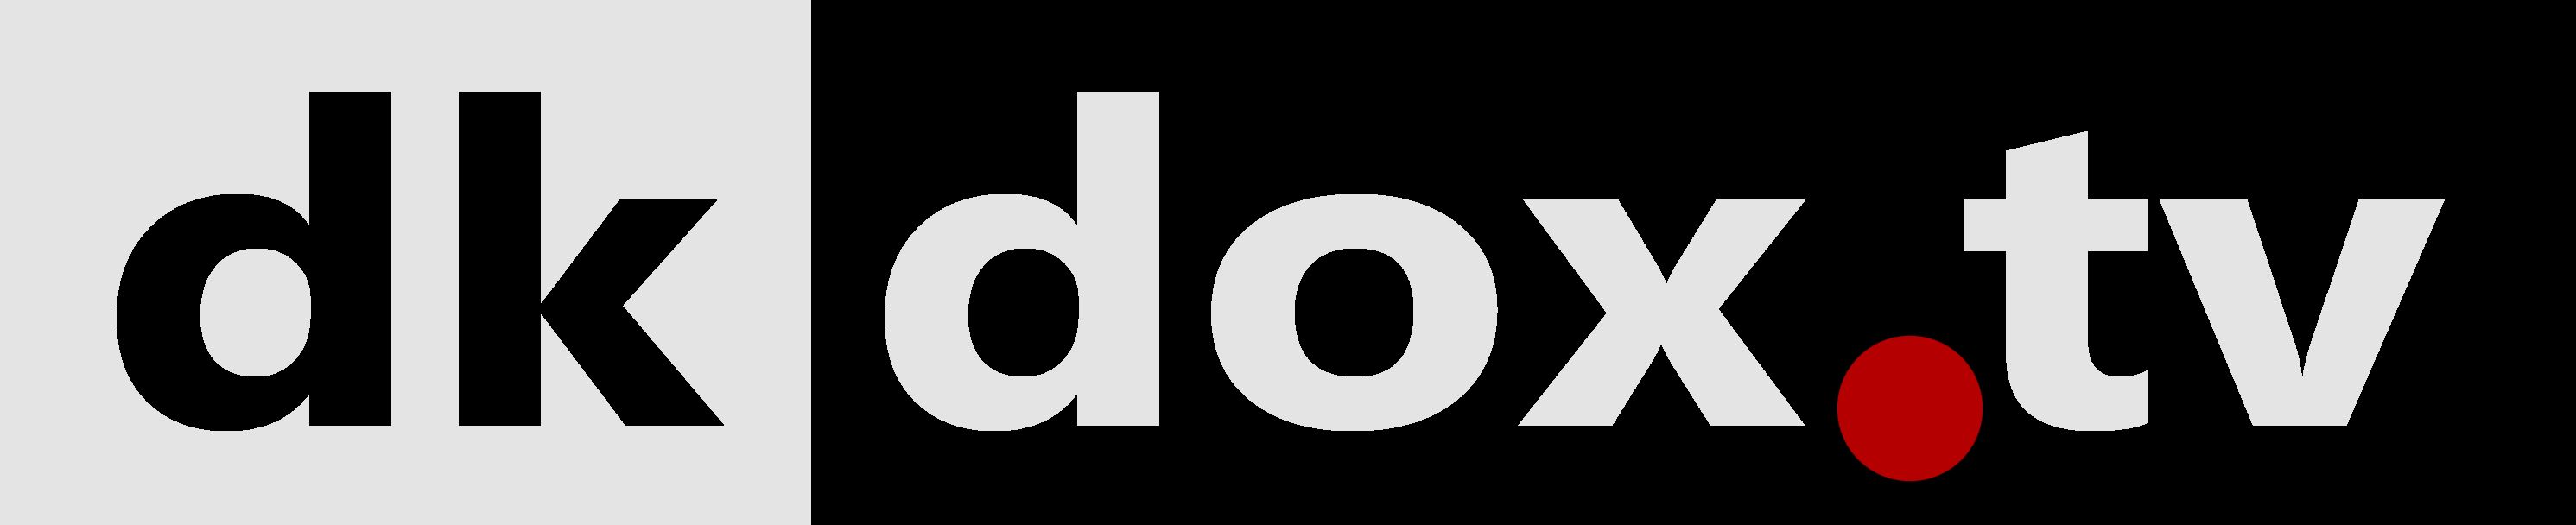 DKDOXTV-logo REAL.jpg